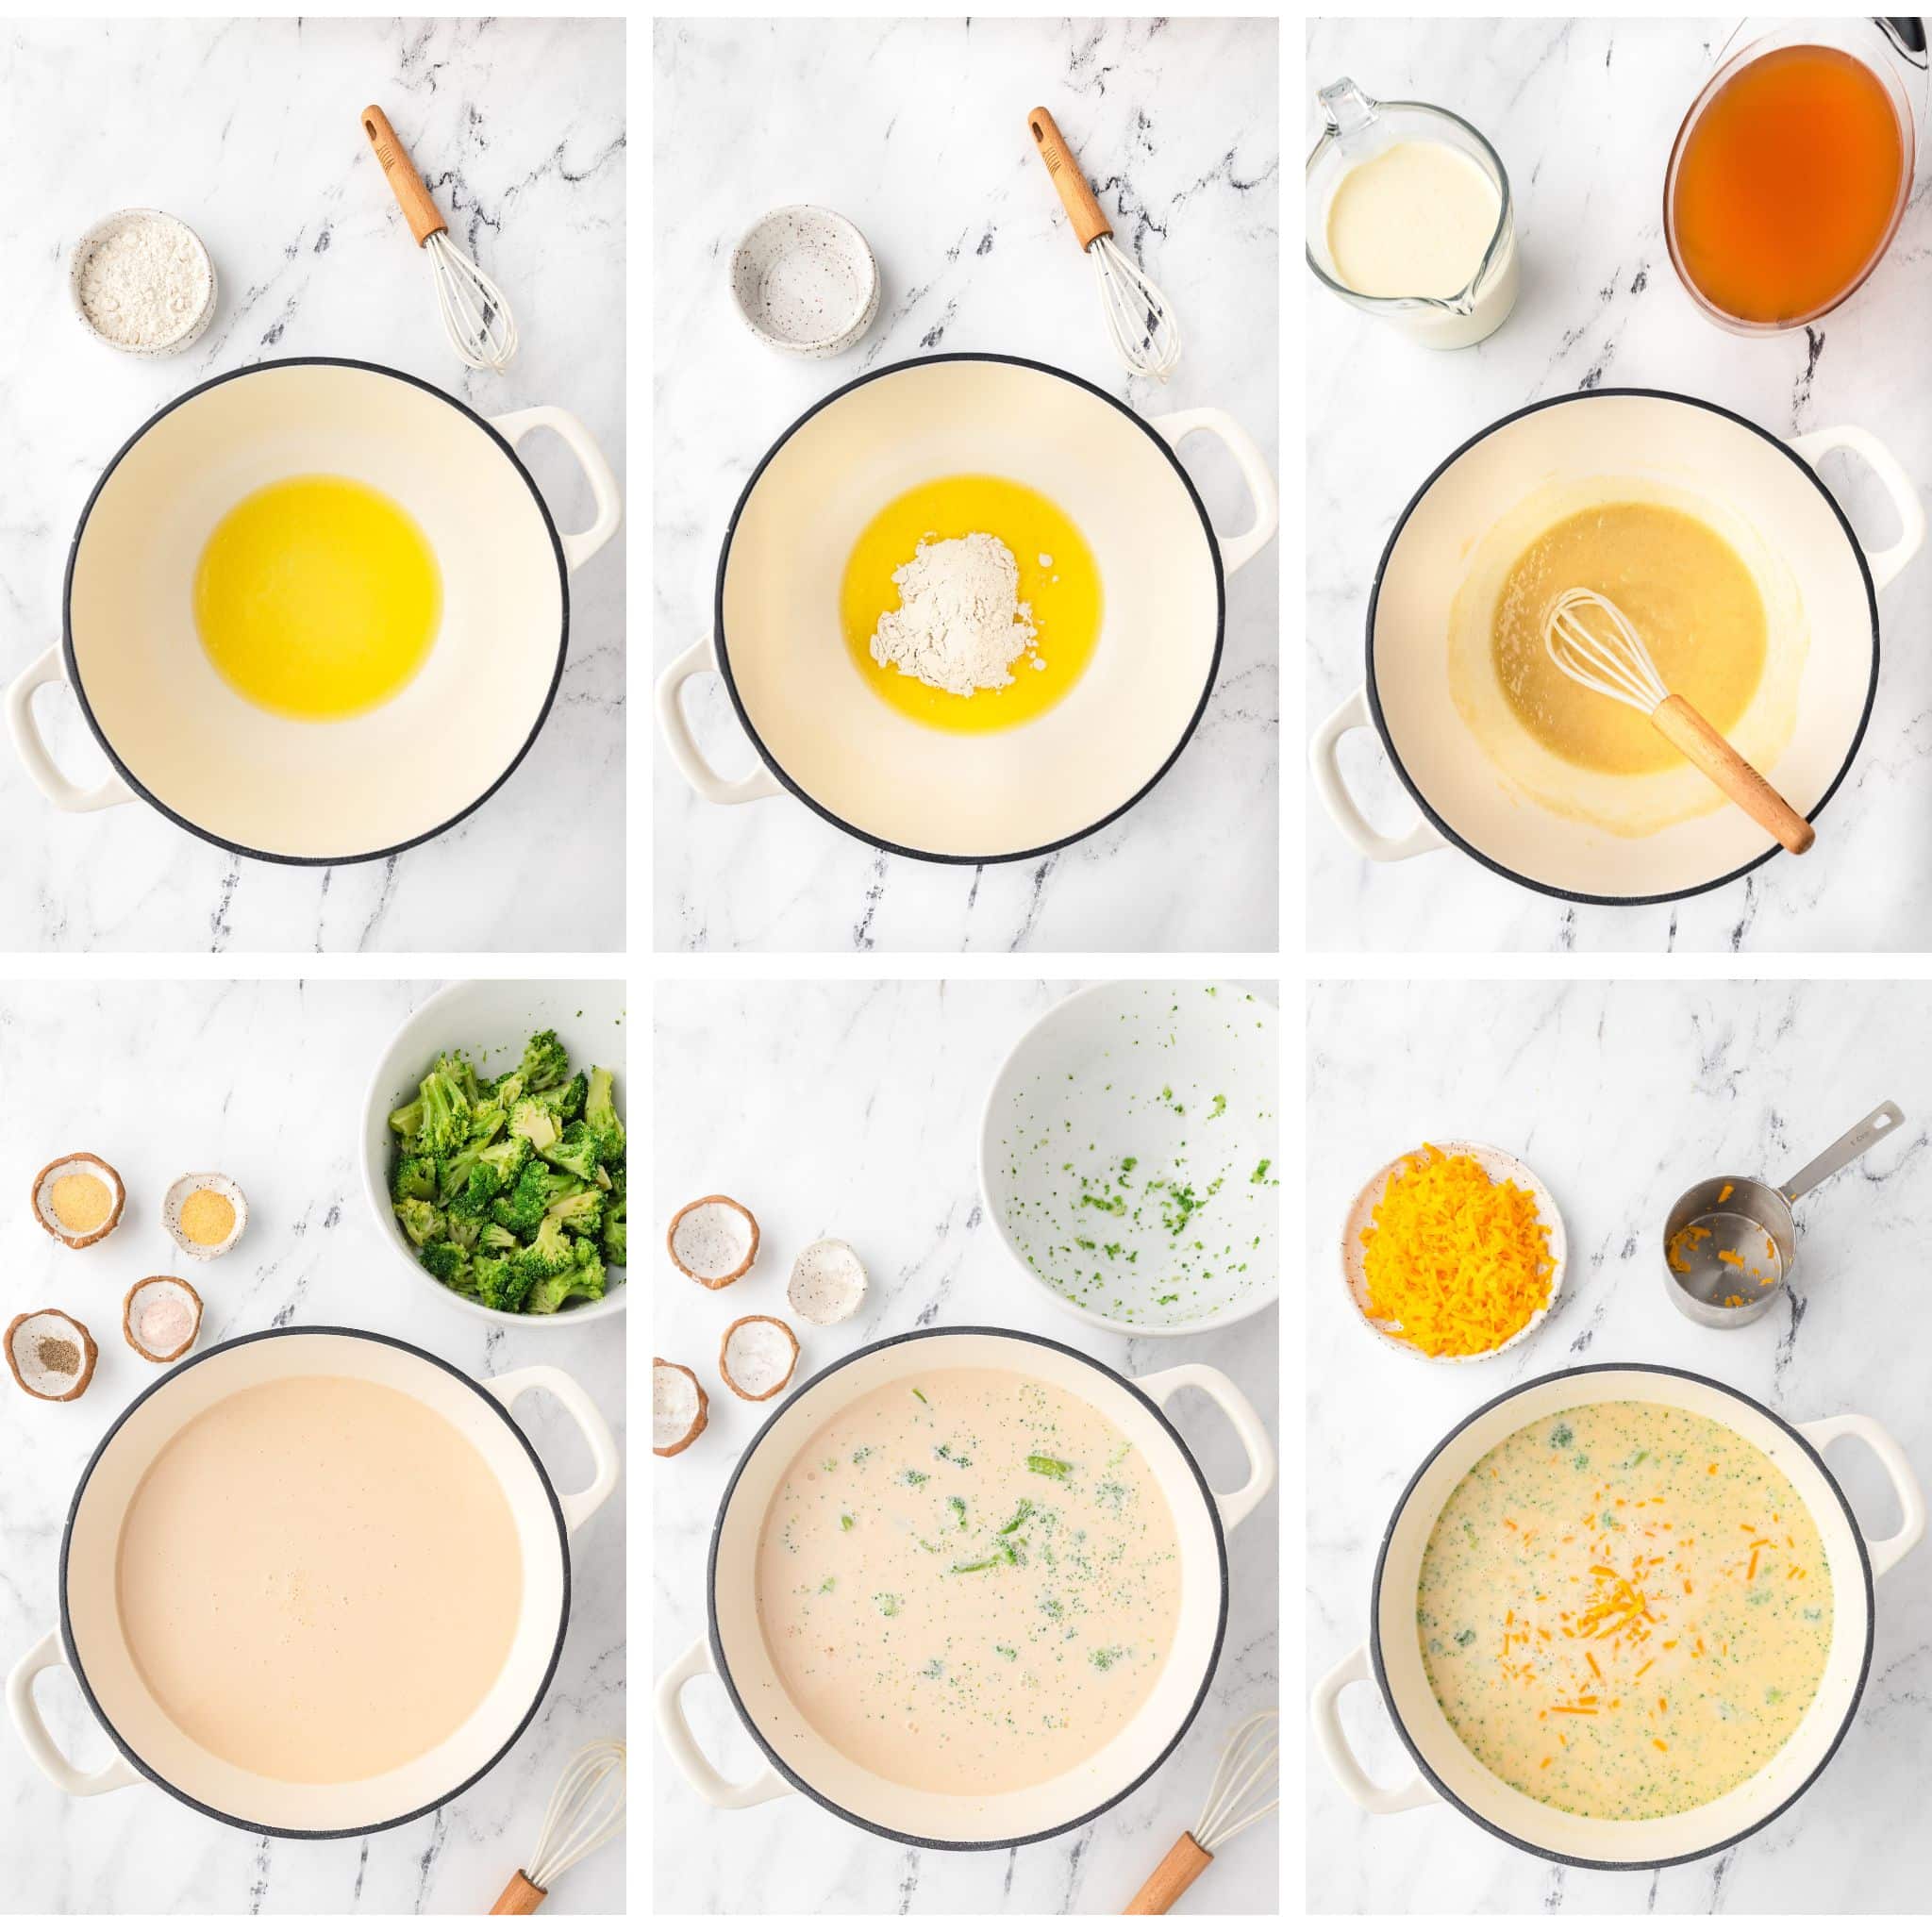 Broccoli Cheddar Soup 6 image process shot collage